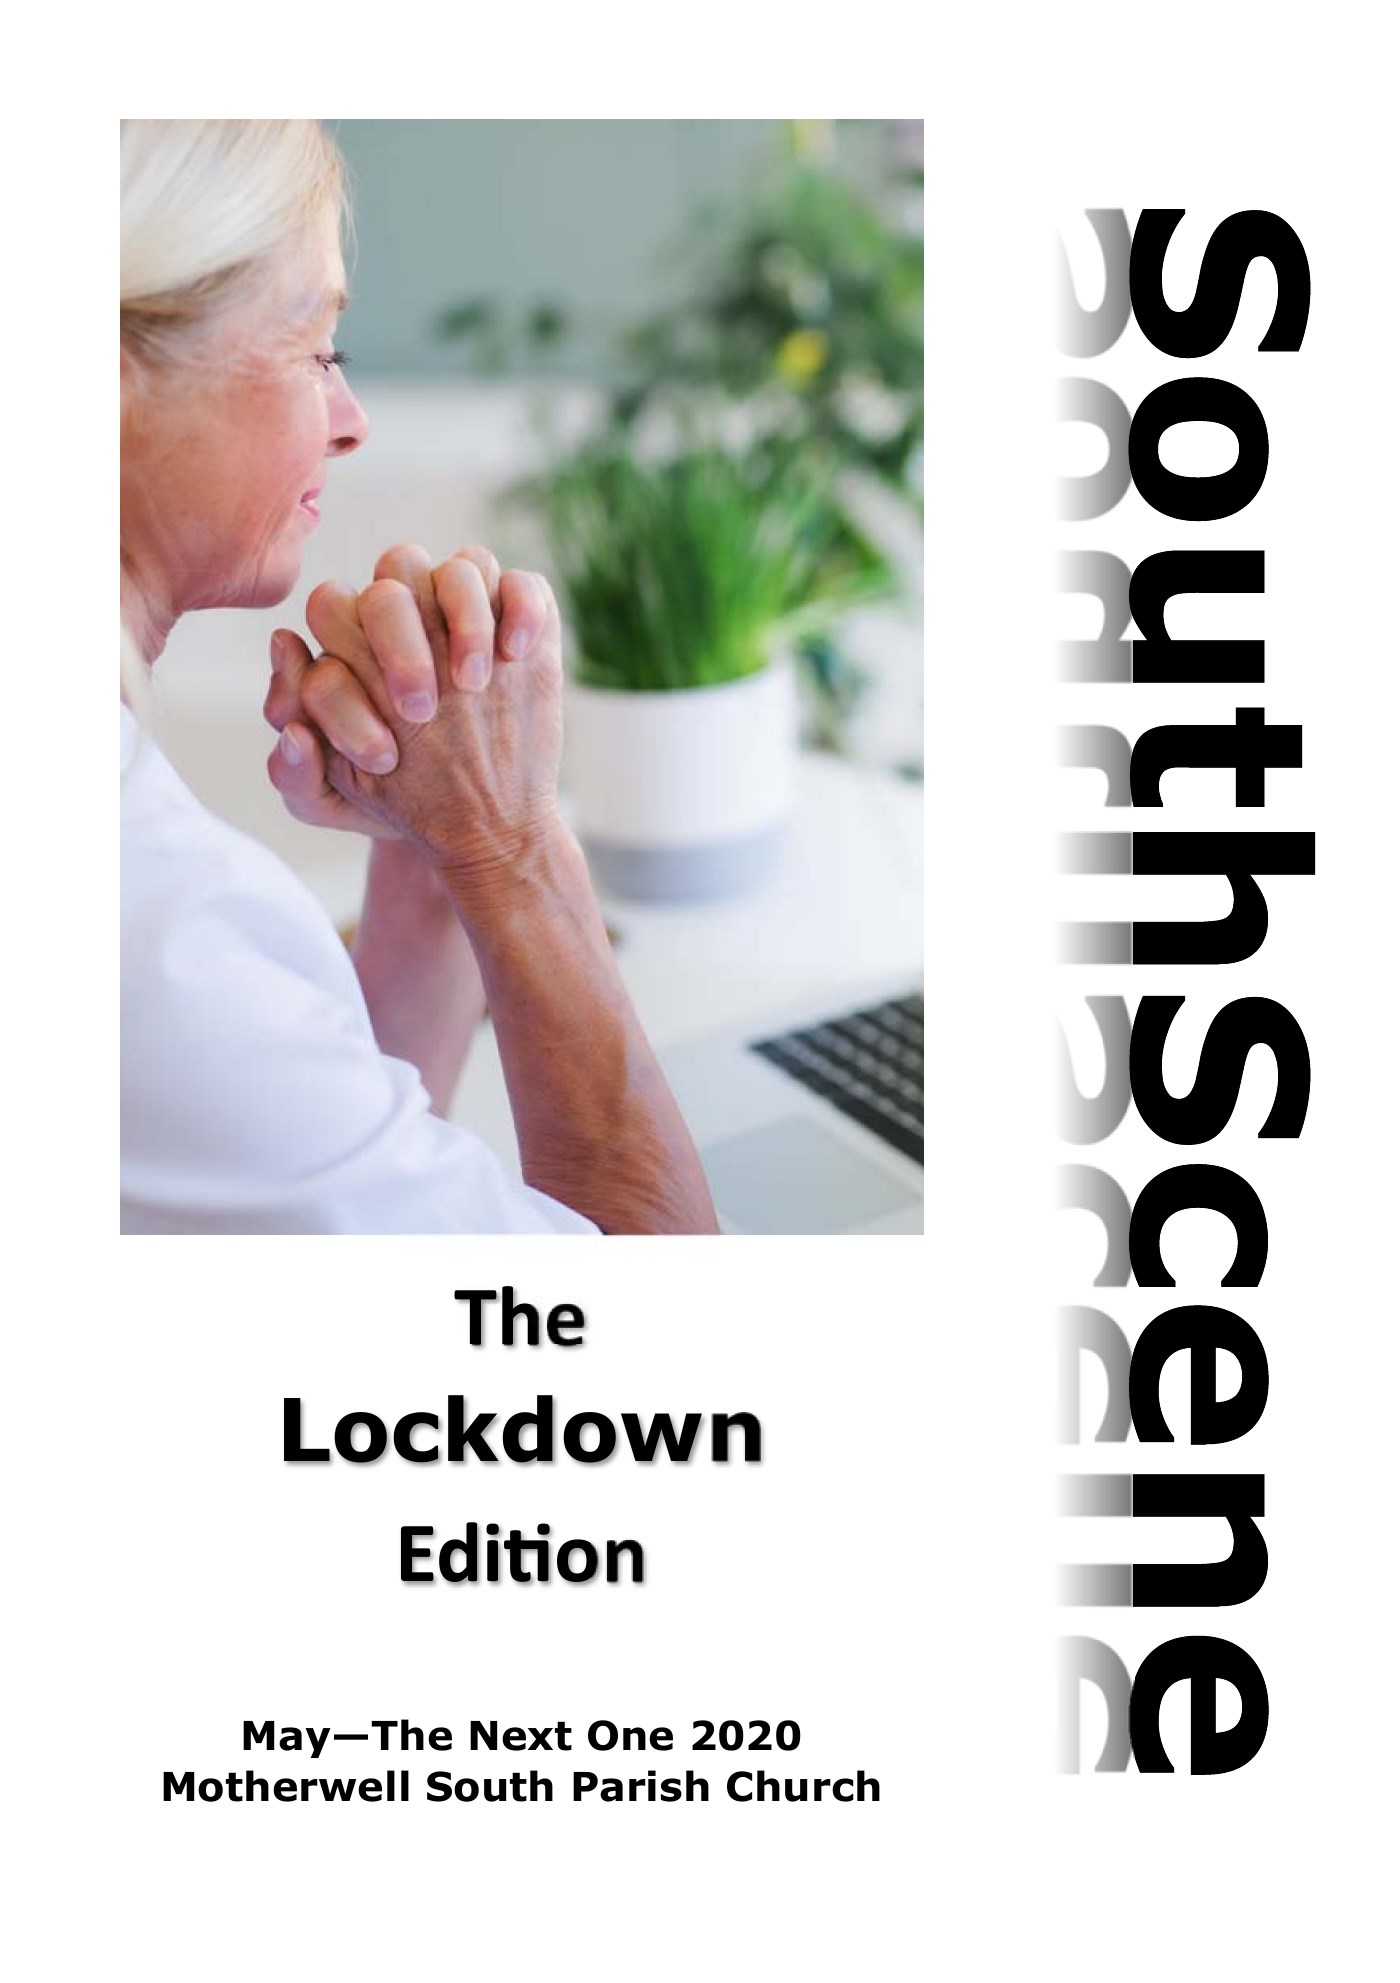 SouthScene: The Lockdown Edition